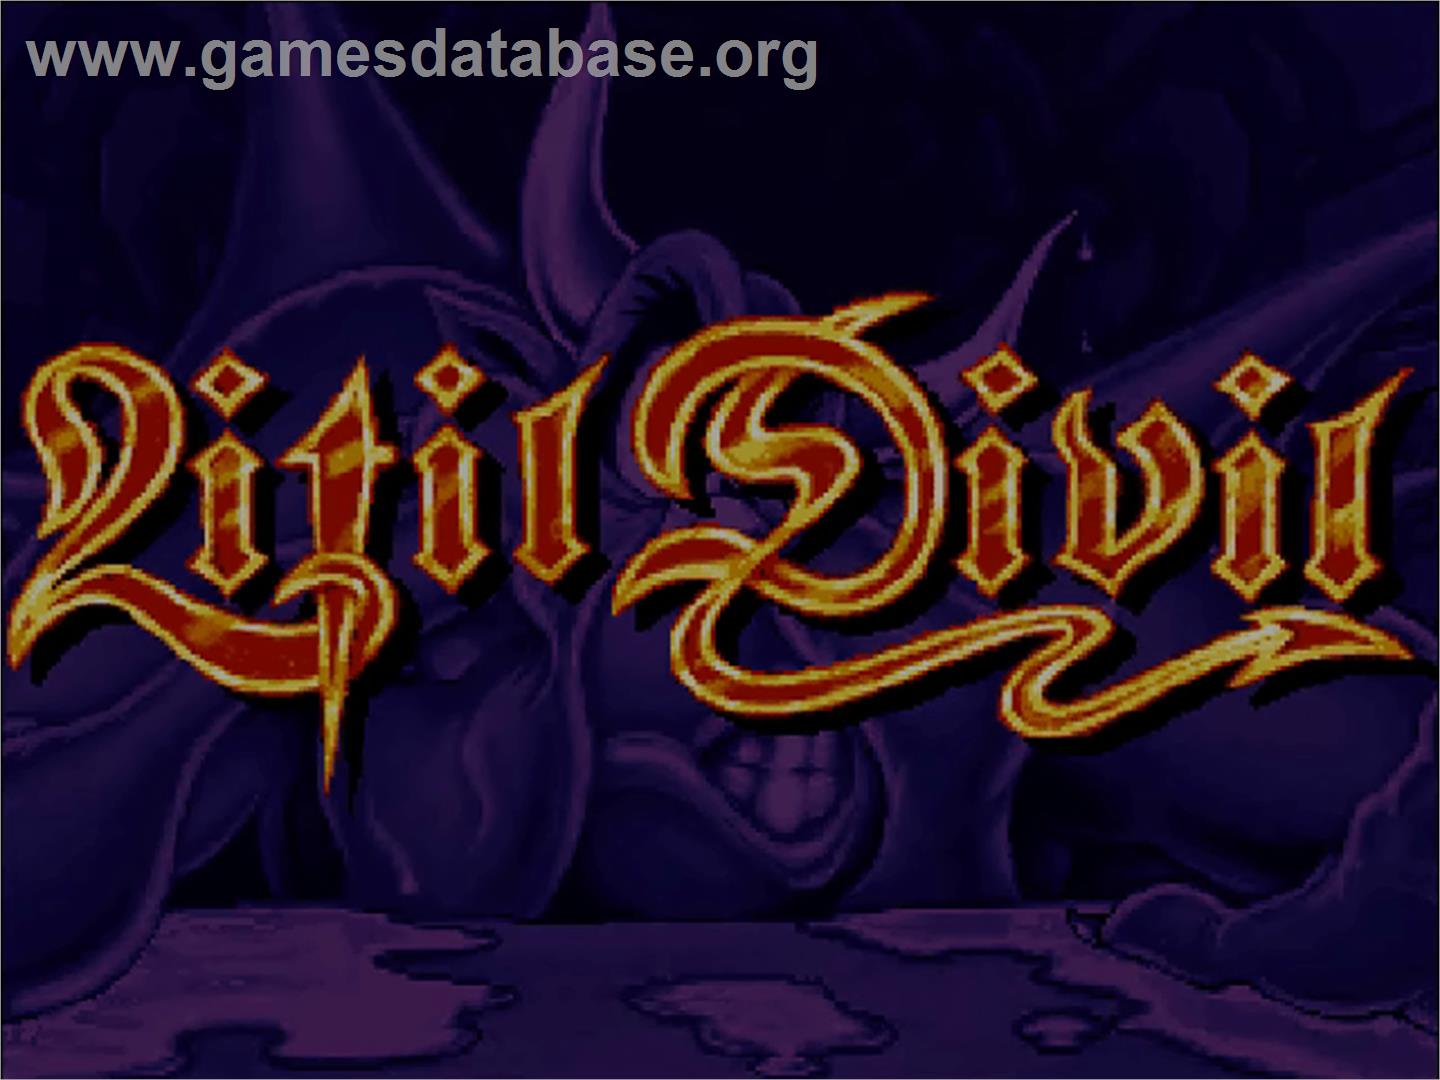 Litil Divil - Commodore Amiga CD32 - Artwork - Title Screen